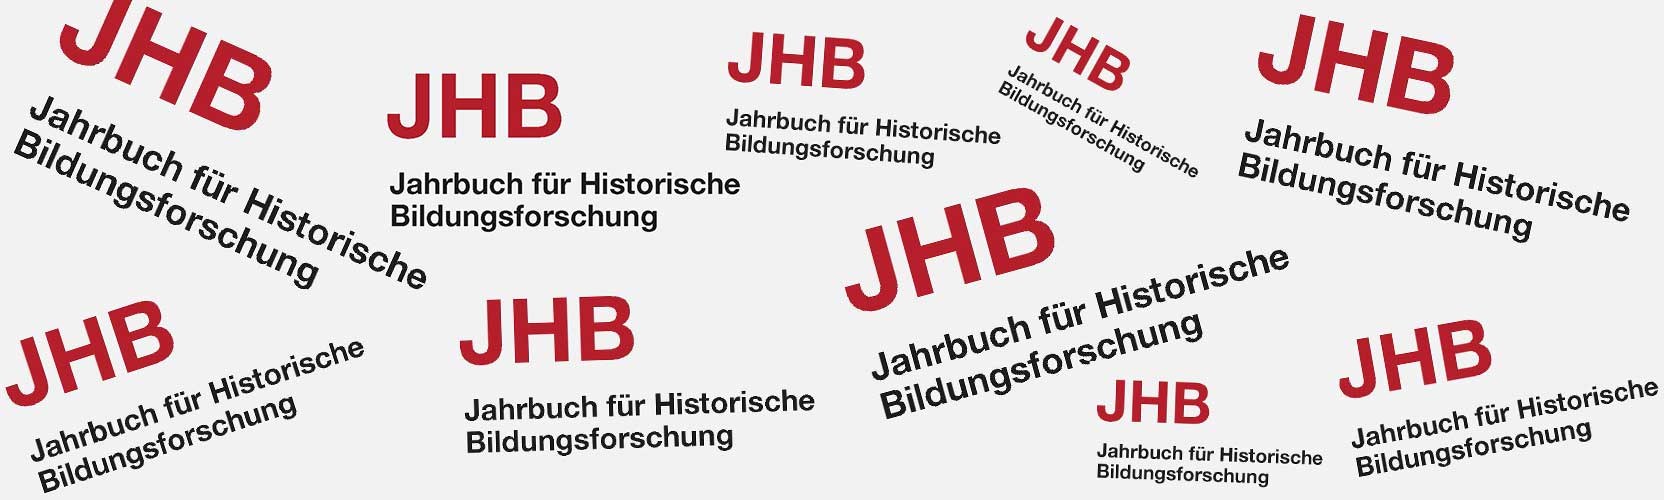 JHB-Titel-Collage